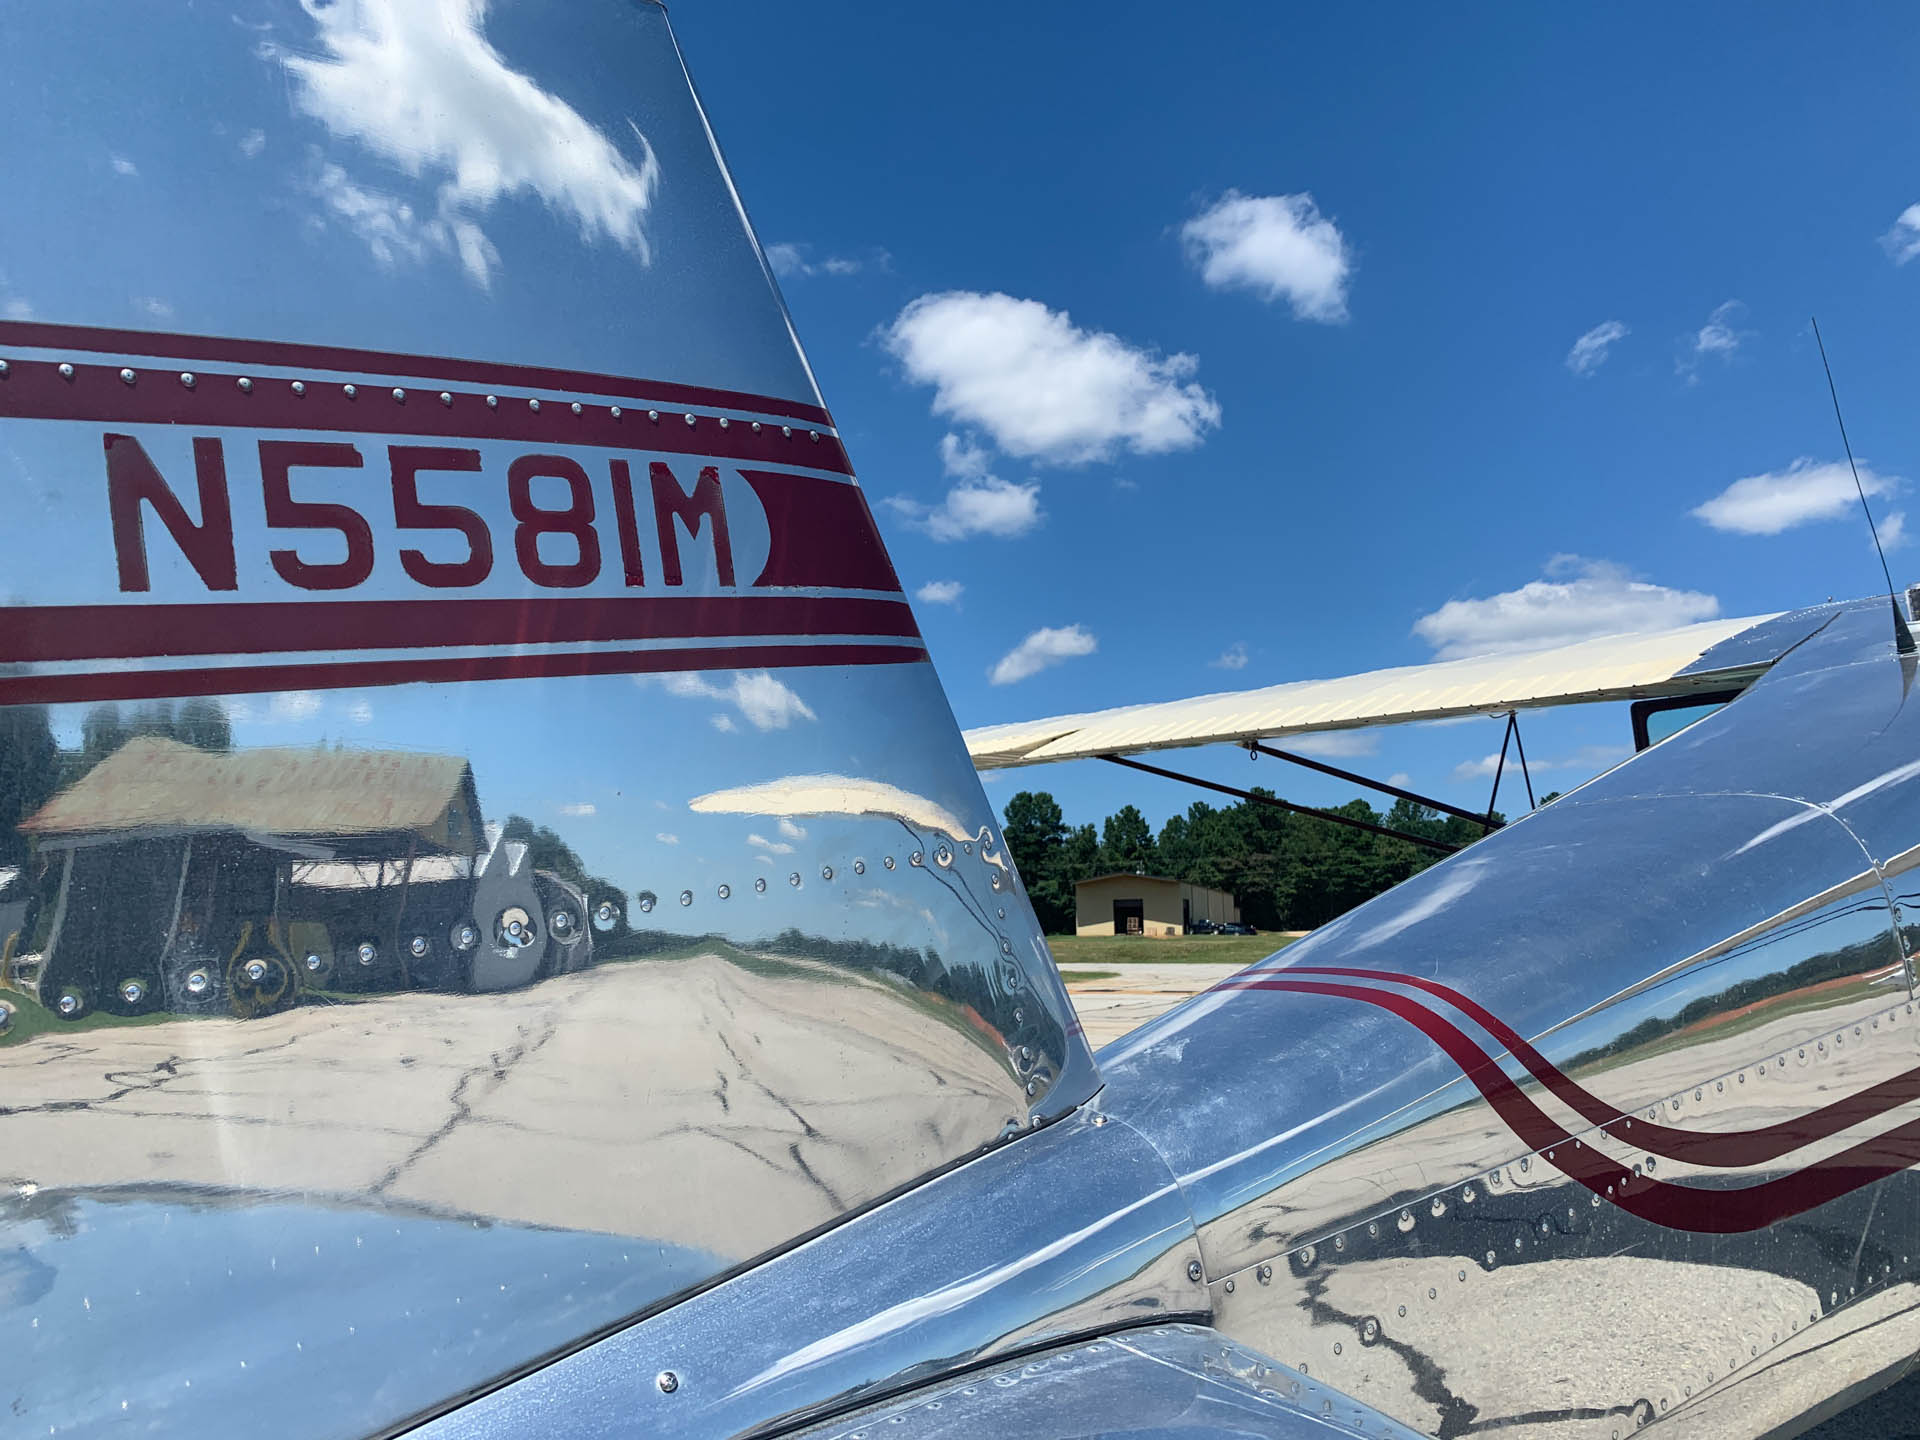 Cessna tail